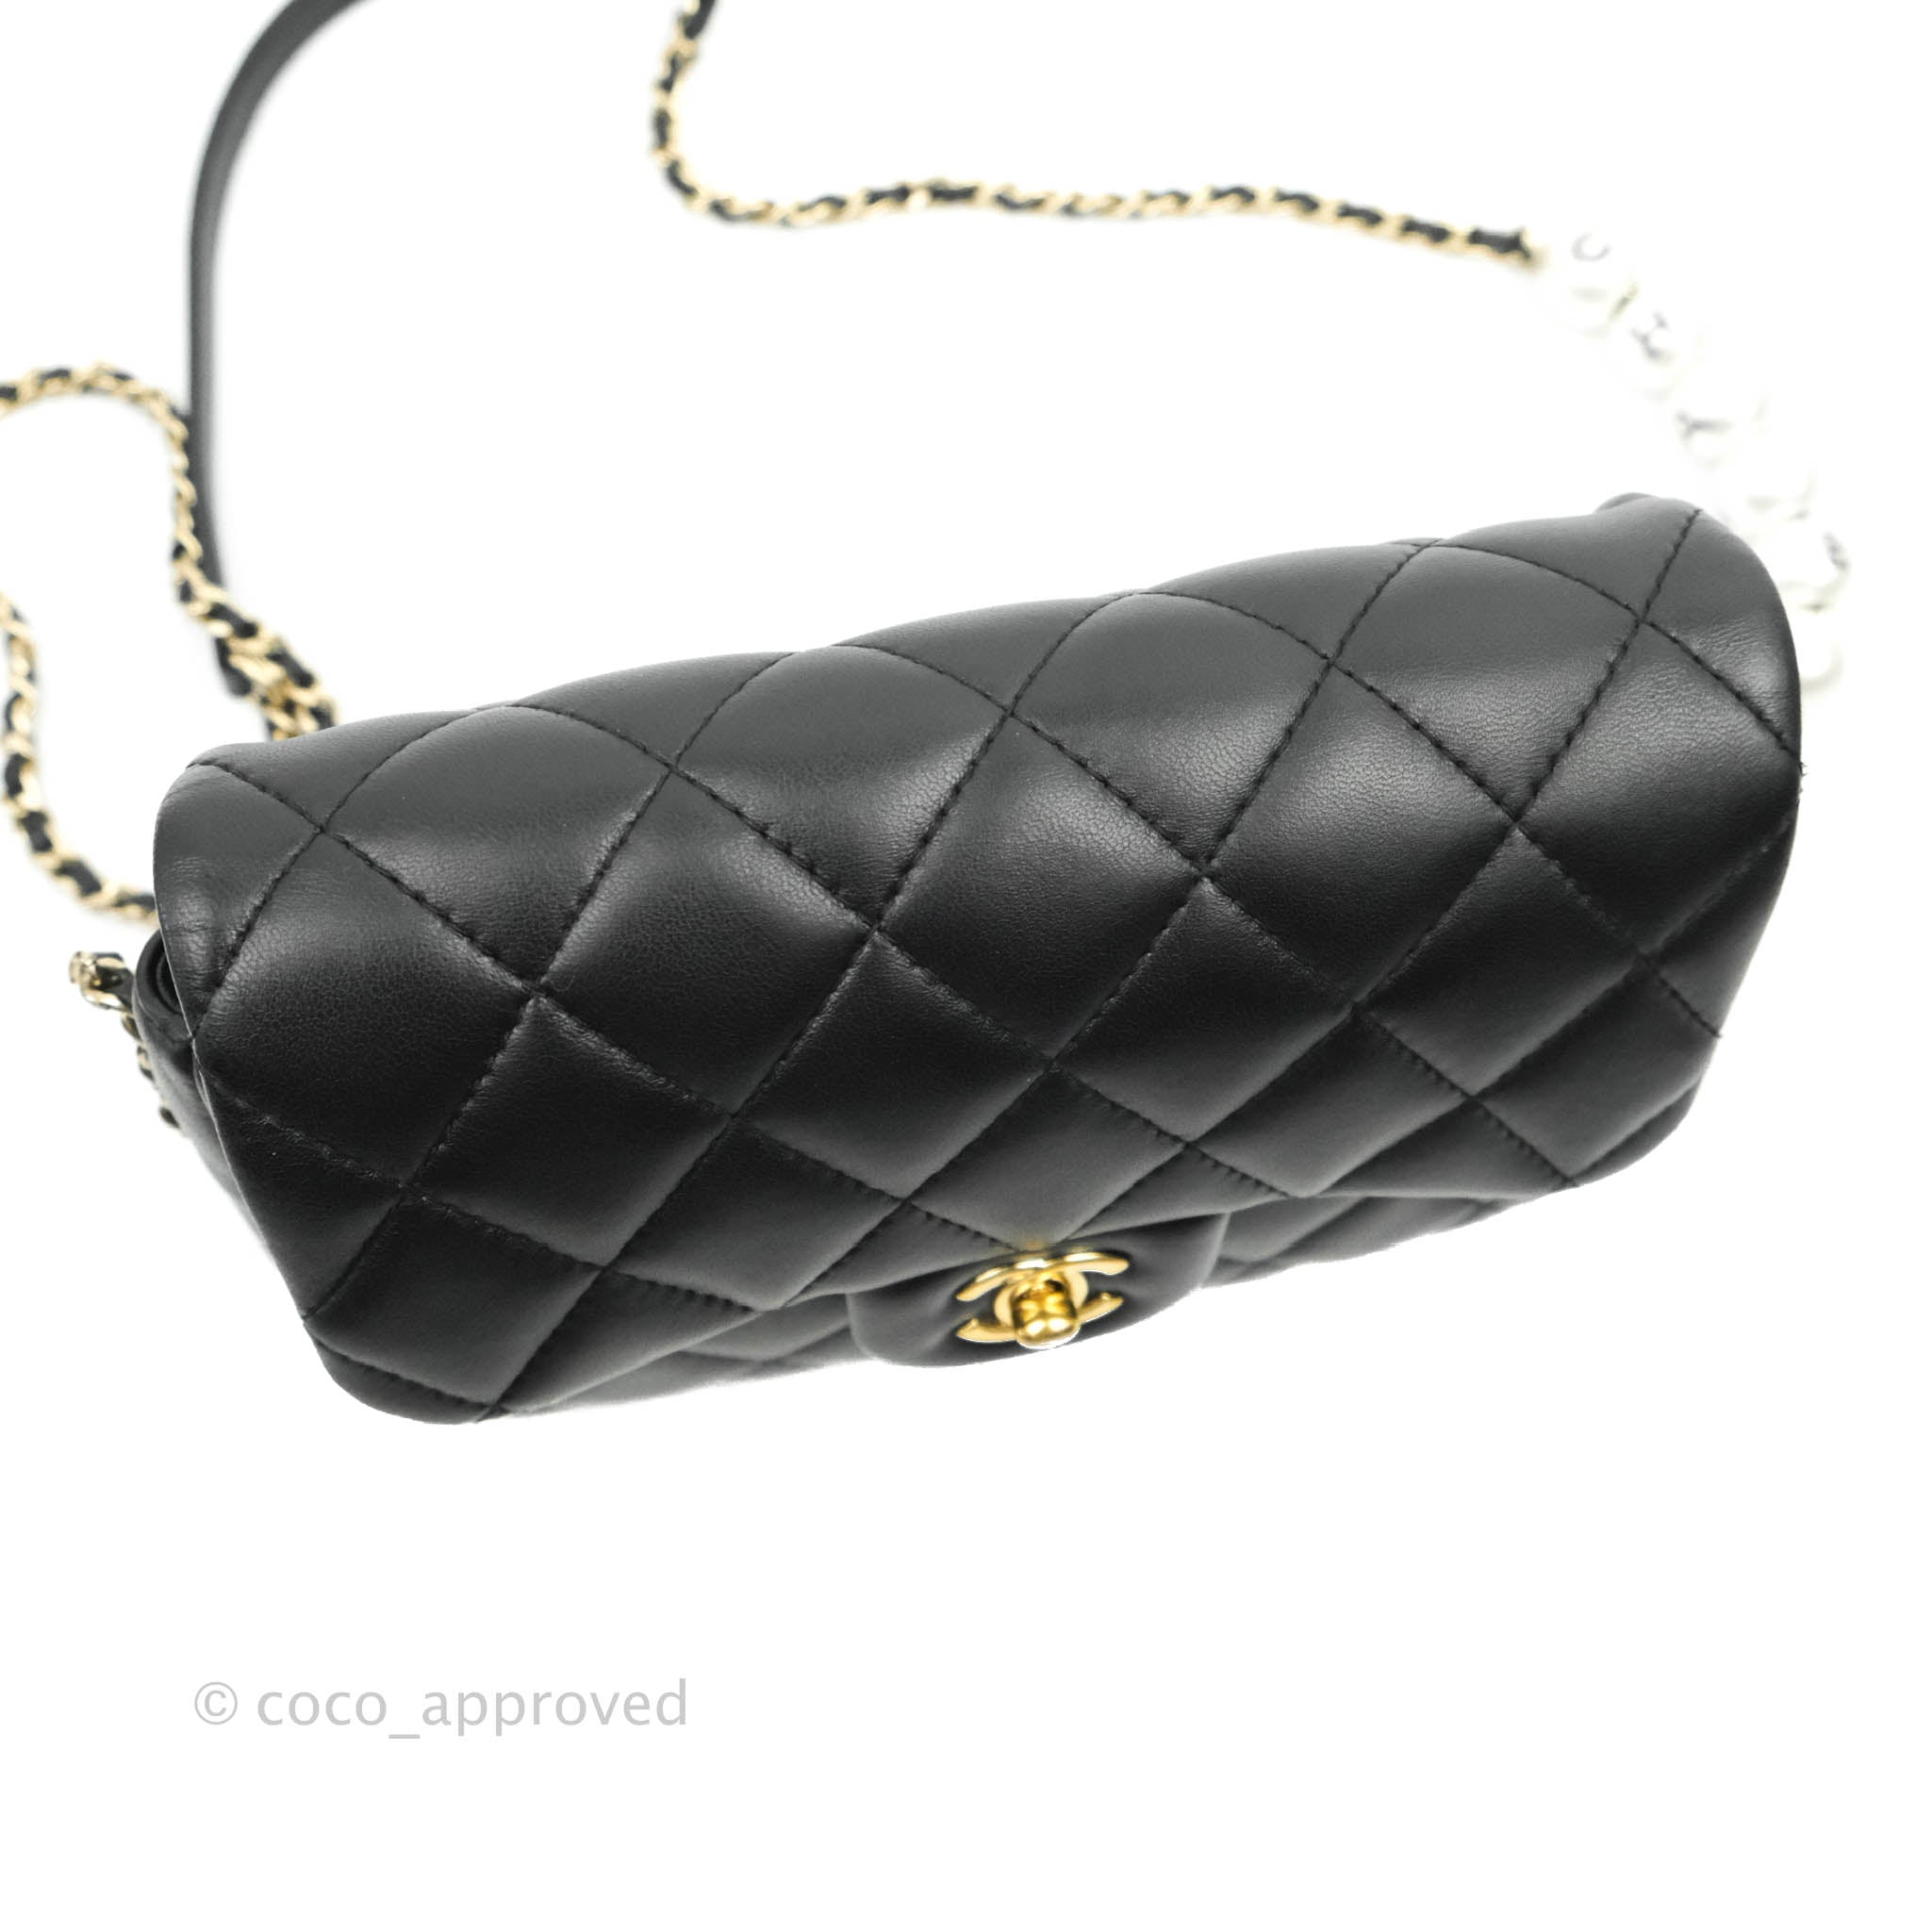 Chanel logo strap bag 23cm ชาแนล เกรดOriginal 11   baggydollกระเปาแบรนดกอปกระเปากอปแบรนดกระเปาแบรนดเนมกระเปากอปกระเปาแบรนดกระเปาเปกระเปาสตางคตางหรองเทาเขมขดหถกชองจดระเบยบกระเปา   Inspired by LnwShopcom